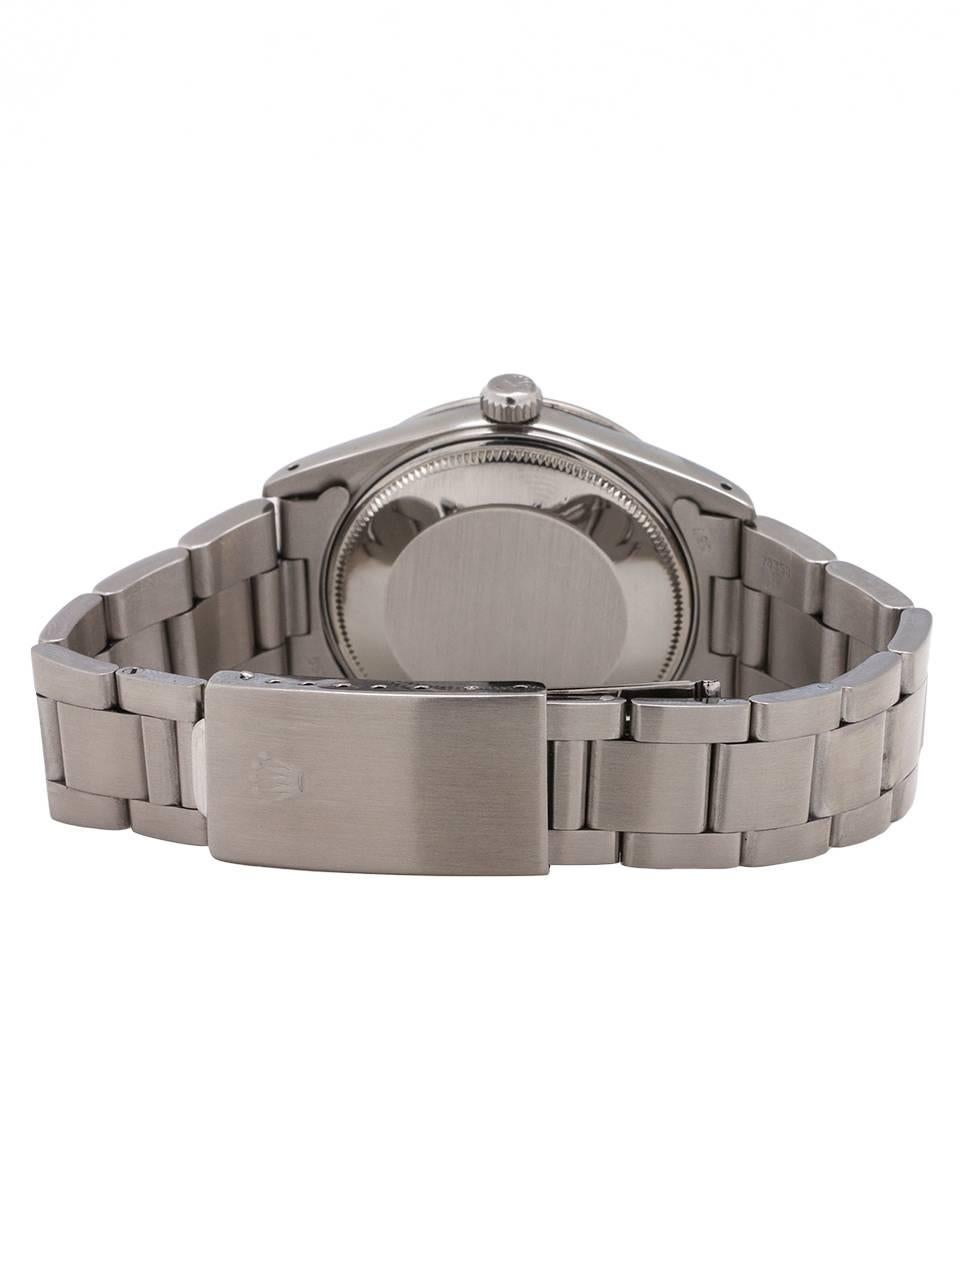 Women's or Men's Rolex stainless steel Oyster Perpetual Date Self Winding Wristwatch Ref 15000  